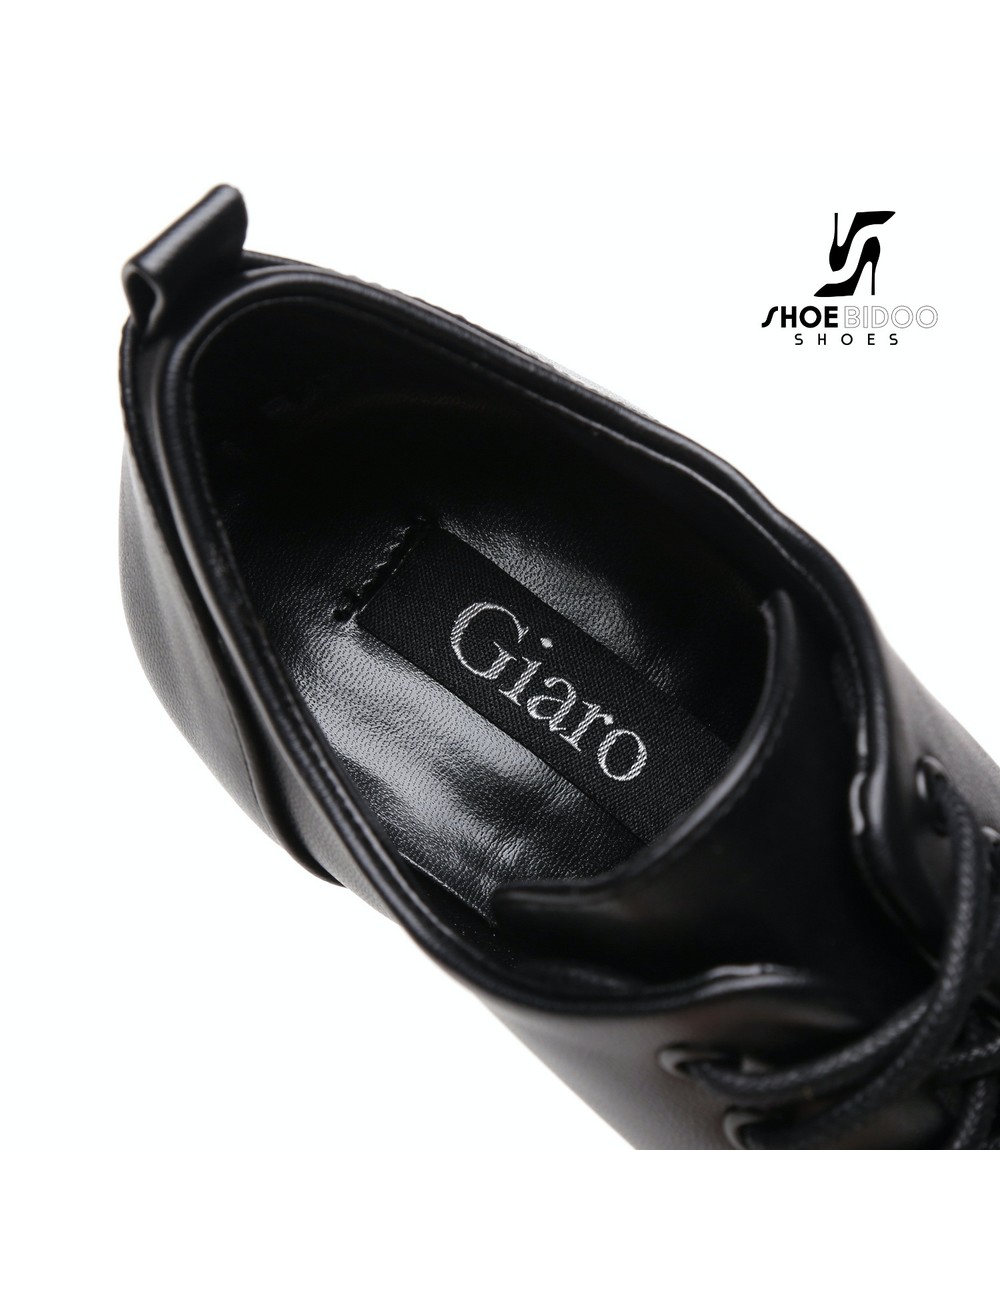 Giaro Black lace-up oxford pumps "Galana" style